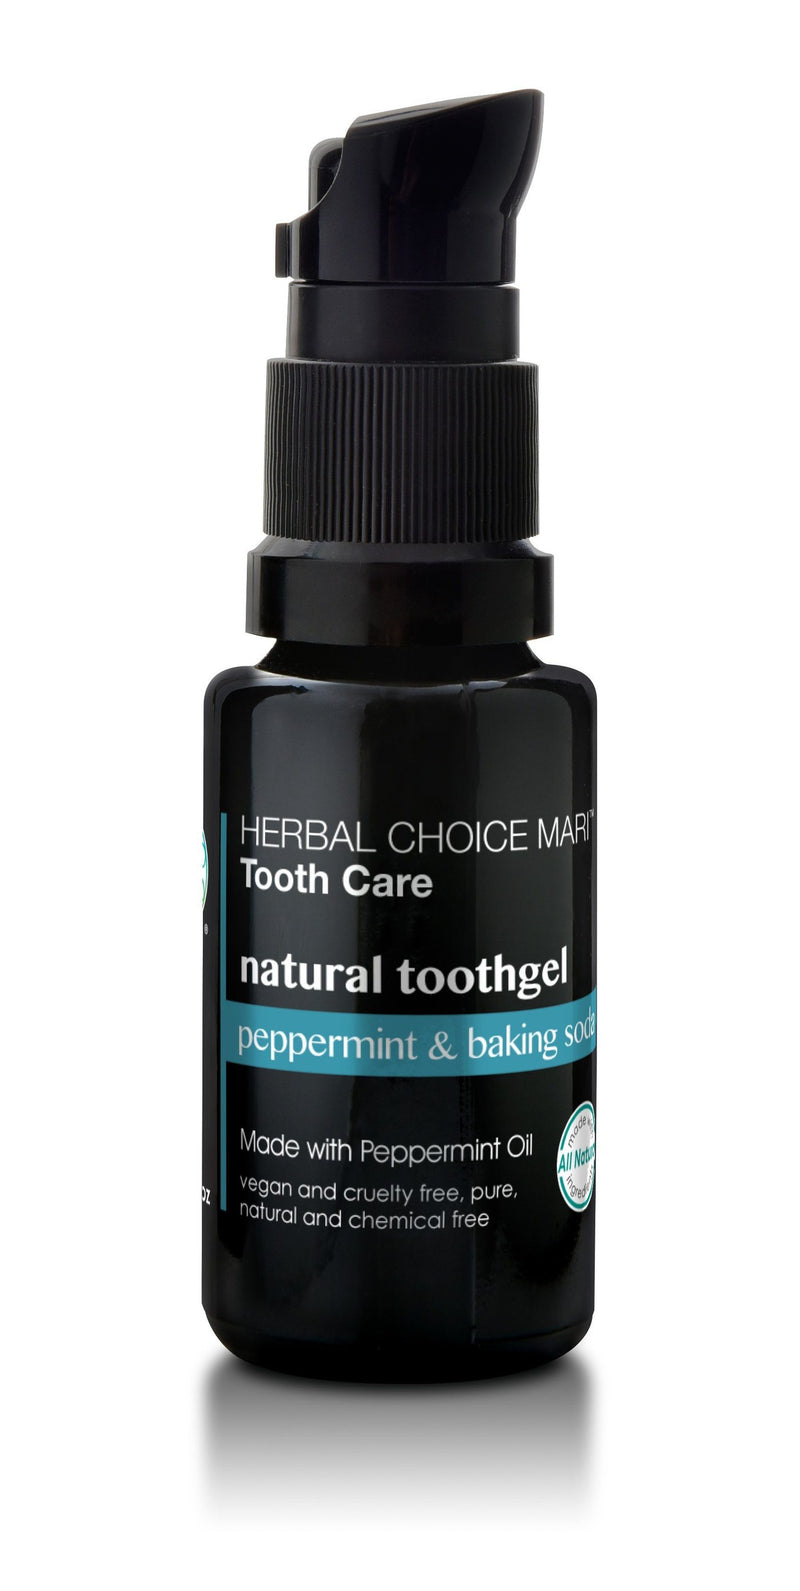 Herbal Choice Mari Natural Toothgel - Herbal Choice Mari Natural Toothgel - Herbal Choice Mari Natural Toothgel